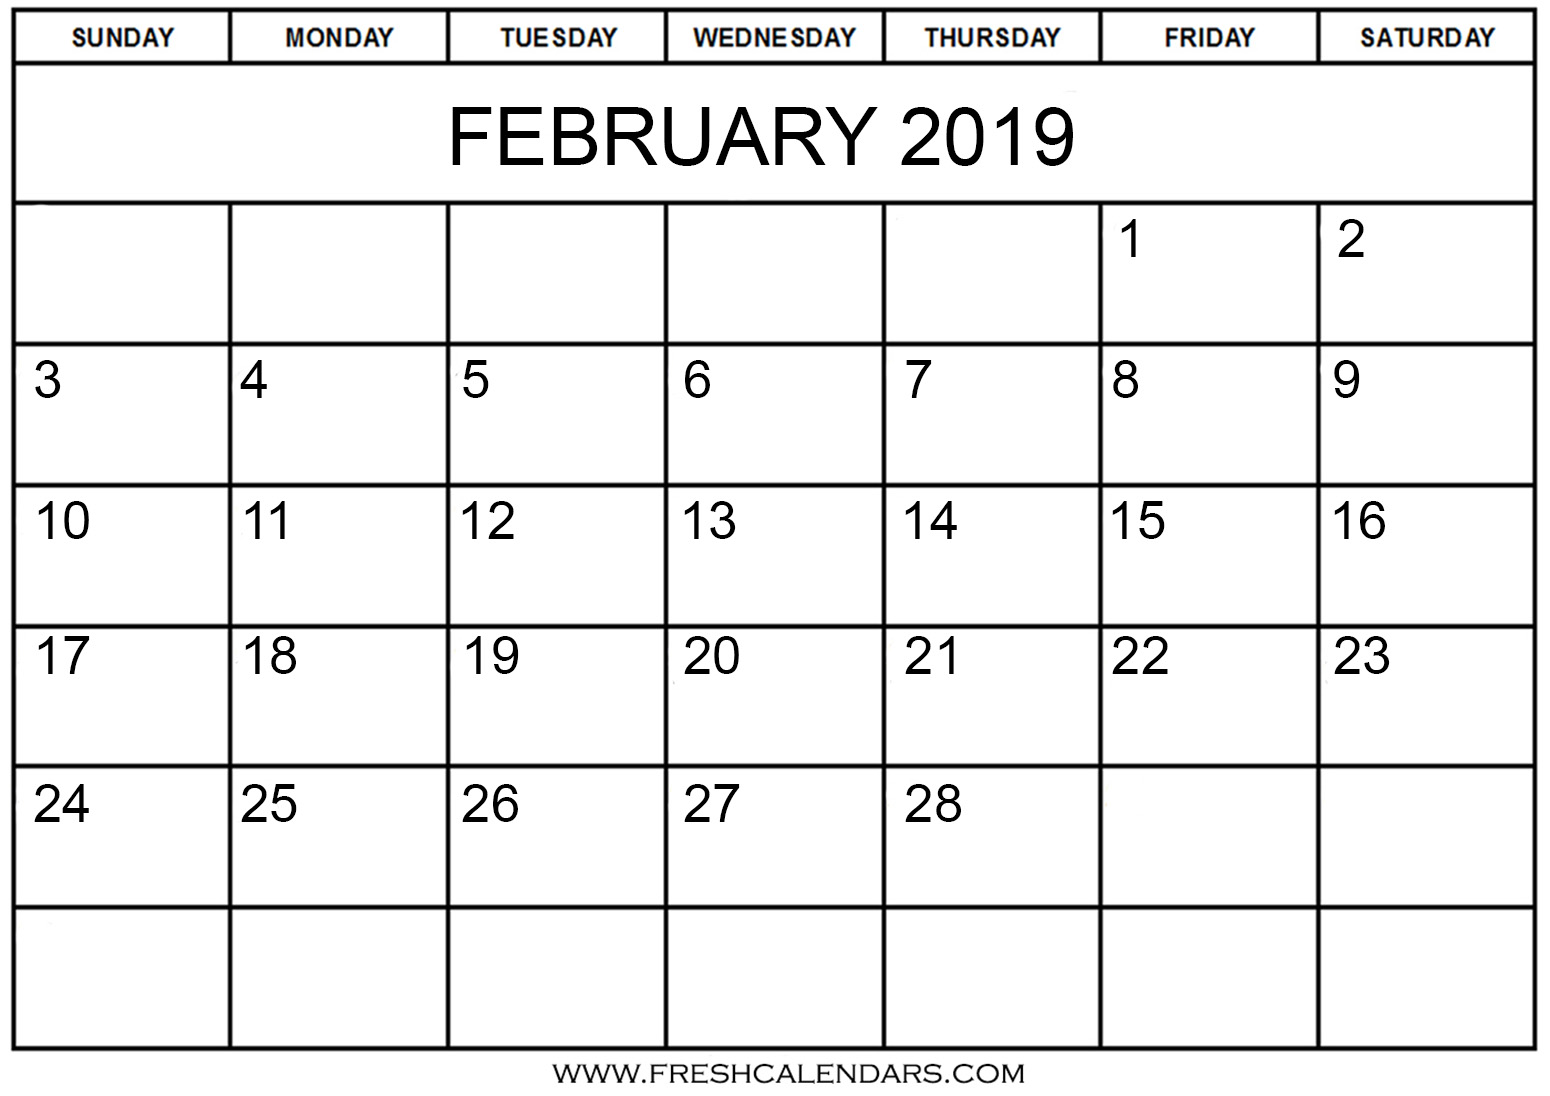 calendar-february-2019-uk-bank-holidays-excel-pdf-word-templates